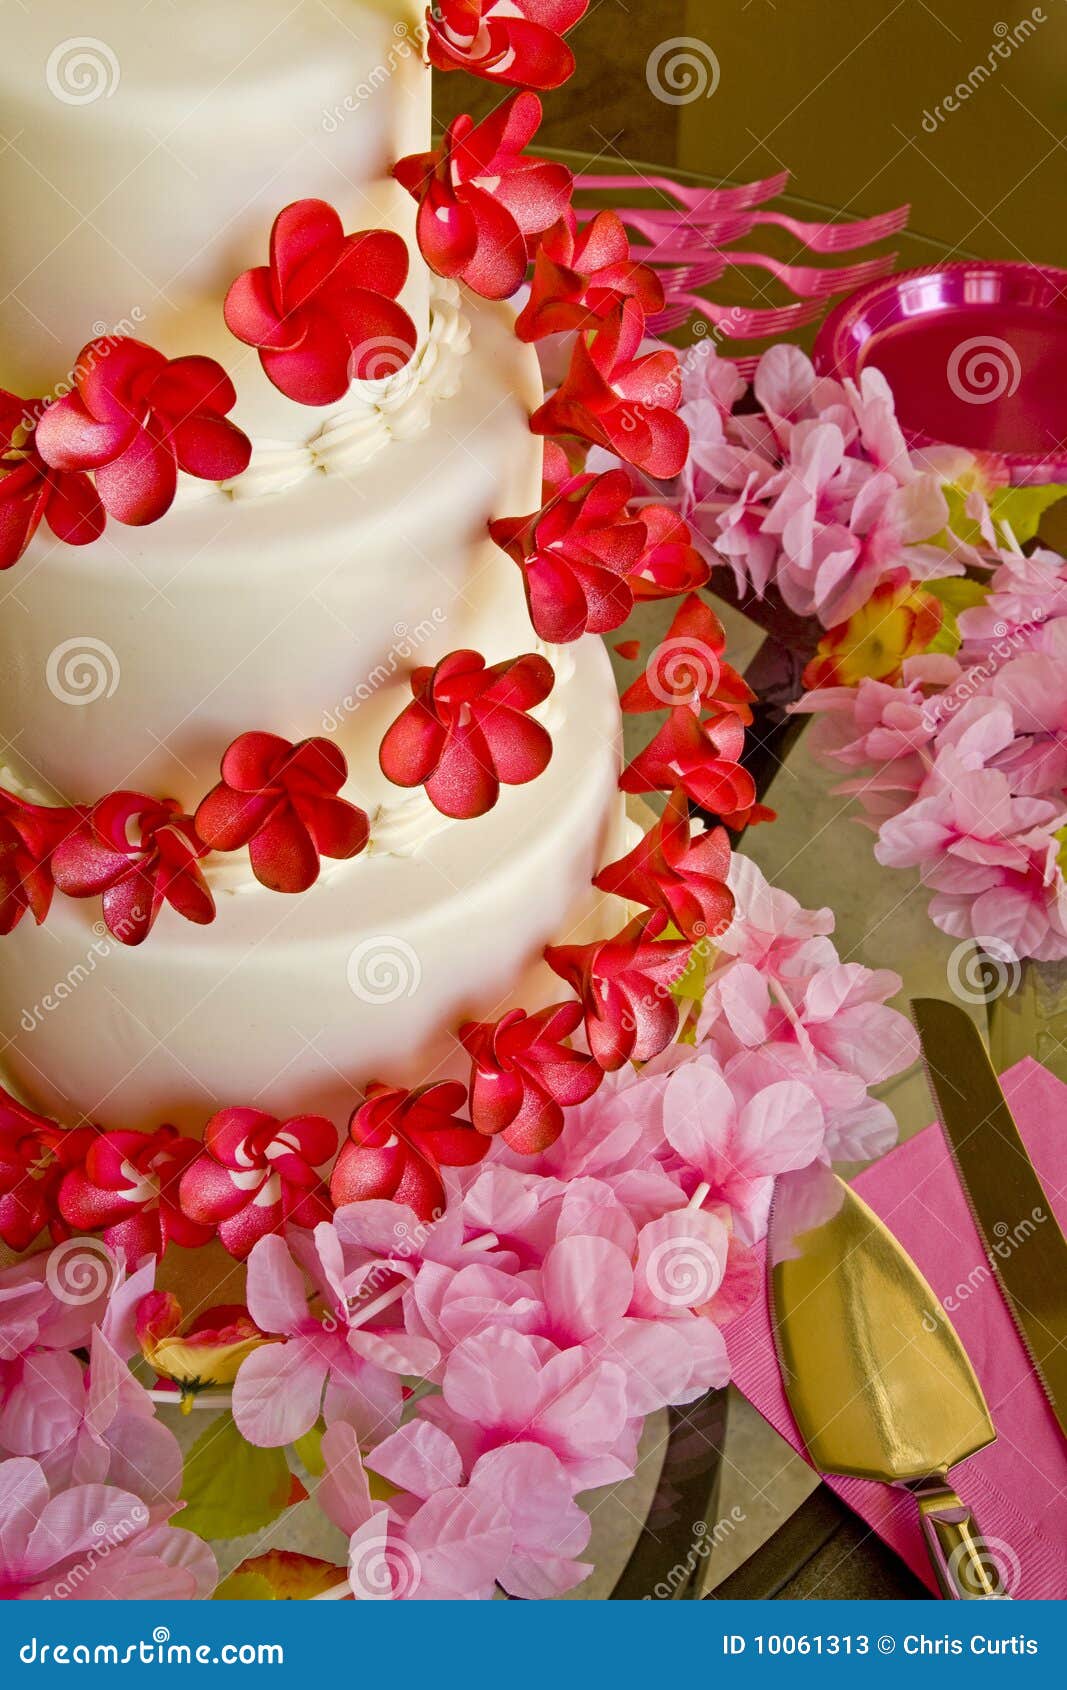 23,988 Red Wedding Cake Stock Photos - Free & Royalty-Free Stock